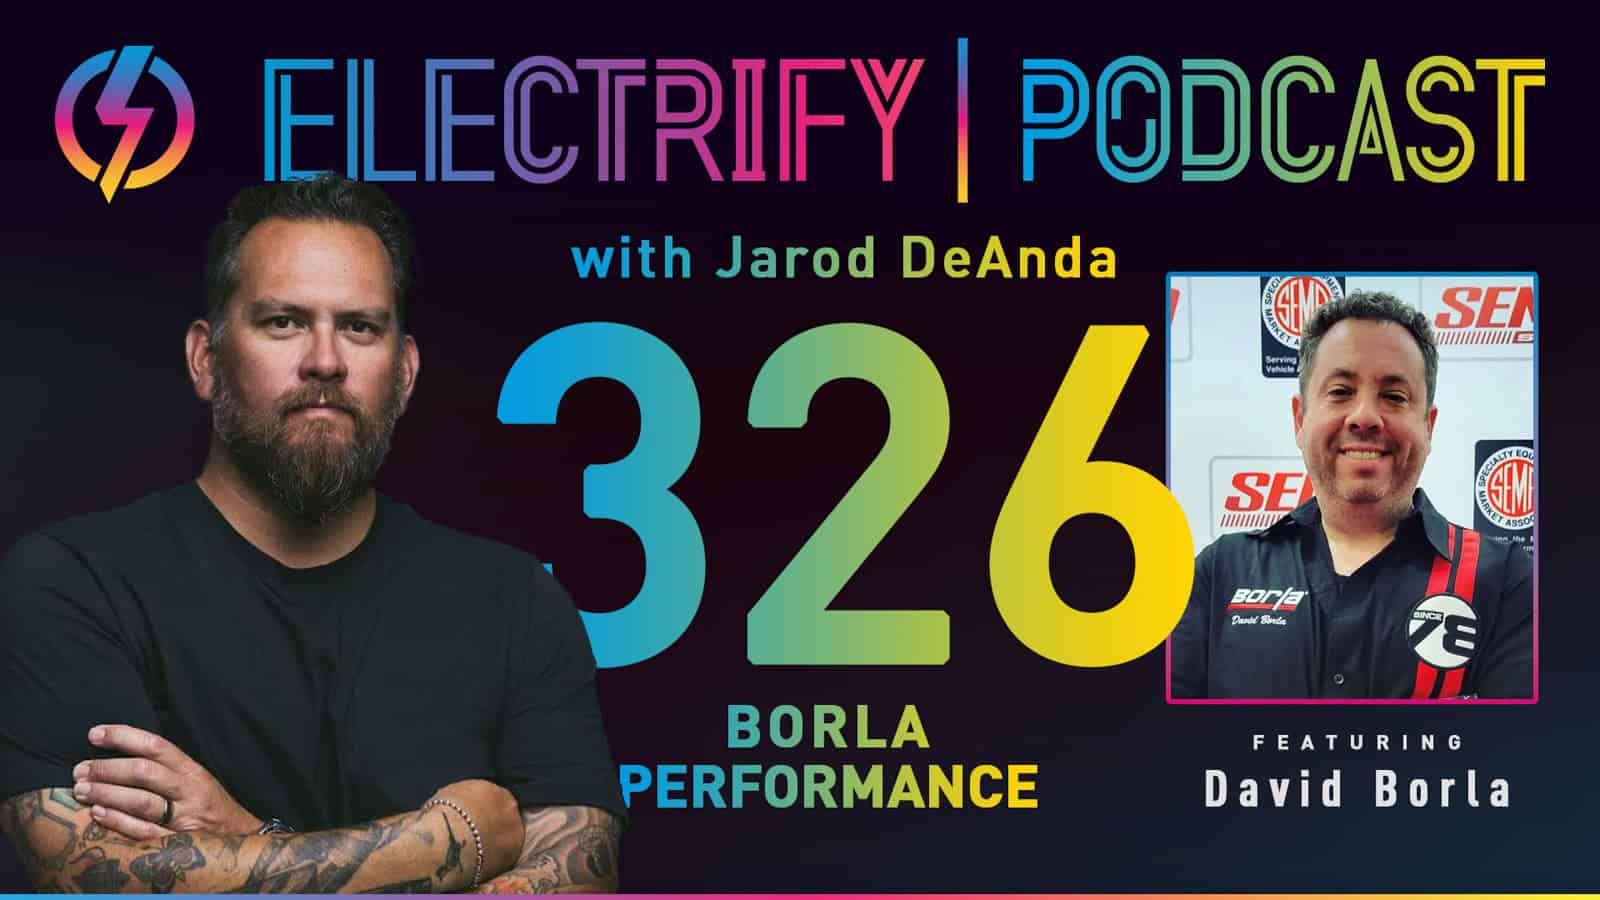 Electrify Podcast episode 326 with David Borla or Borla Performance